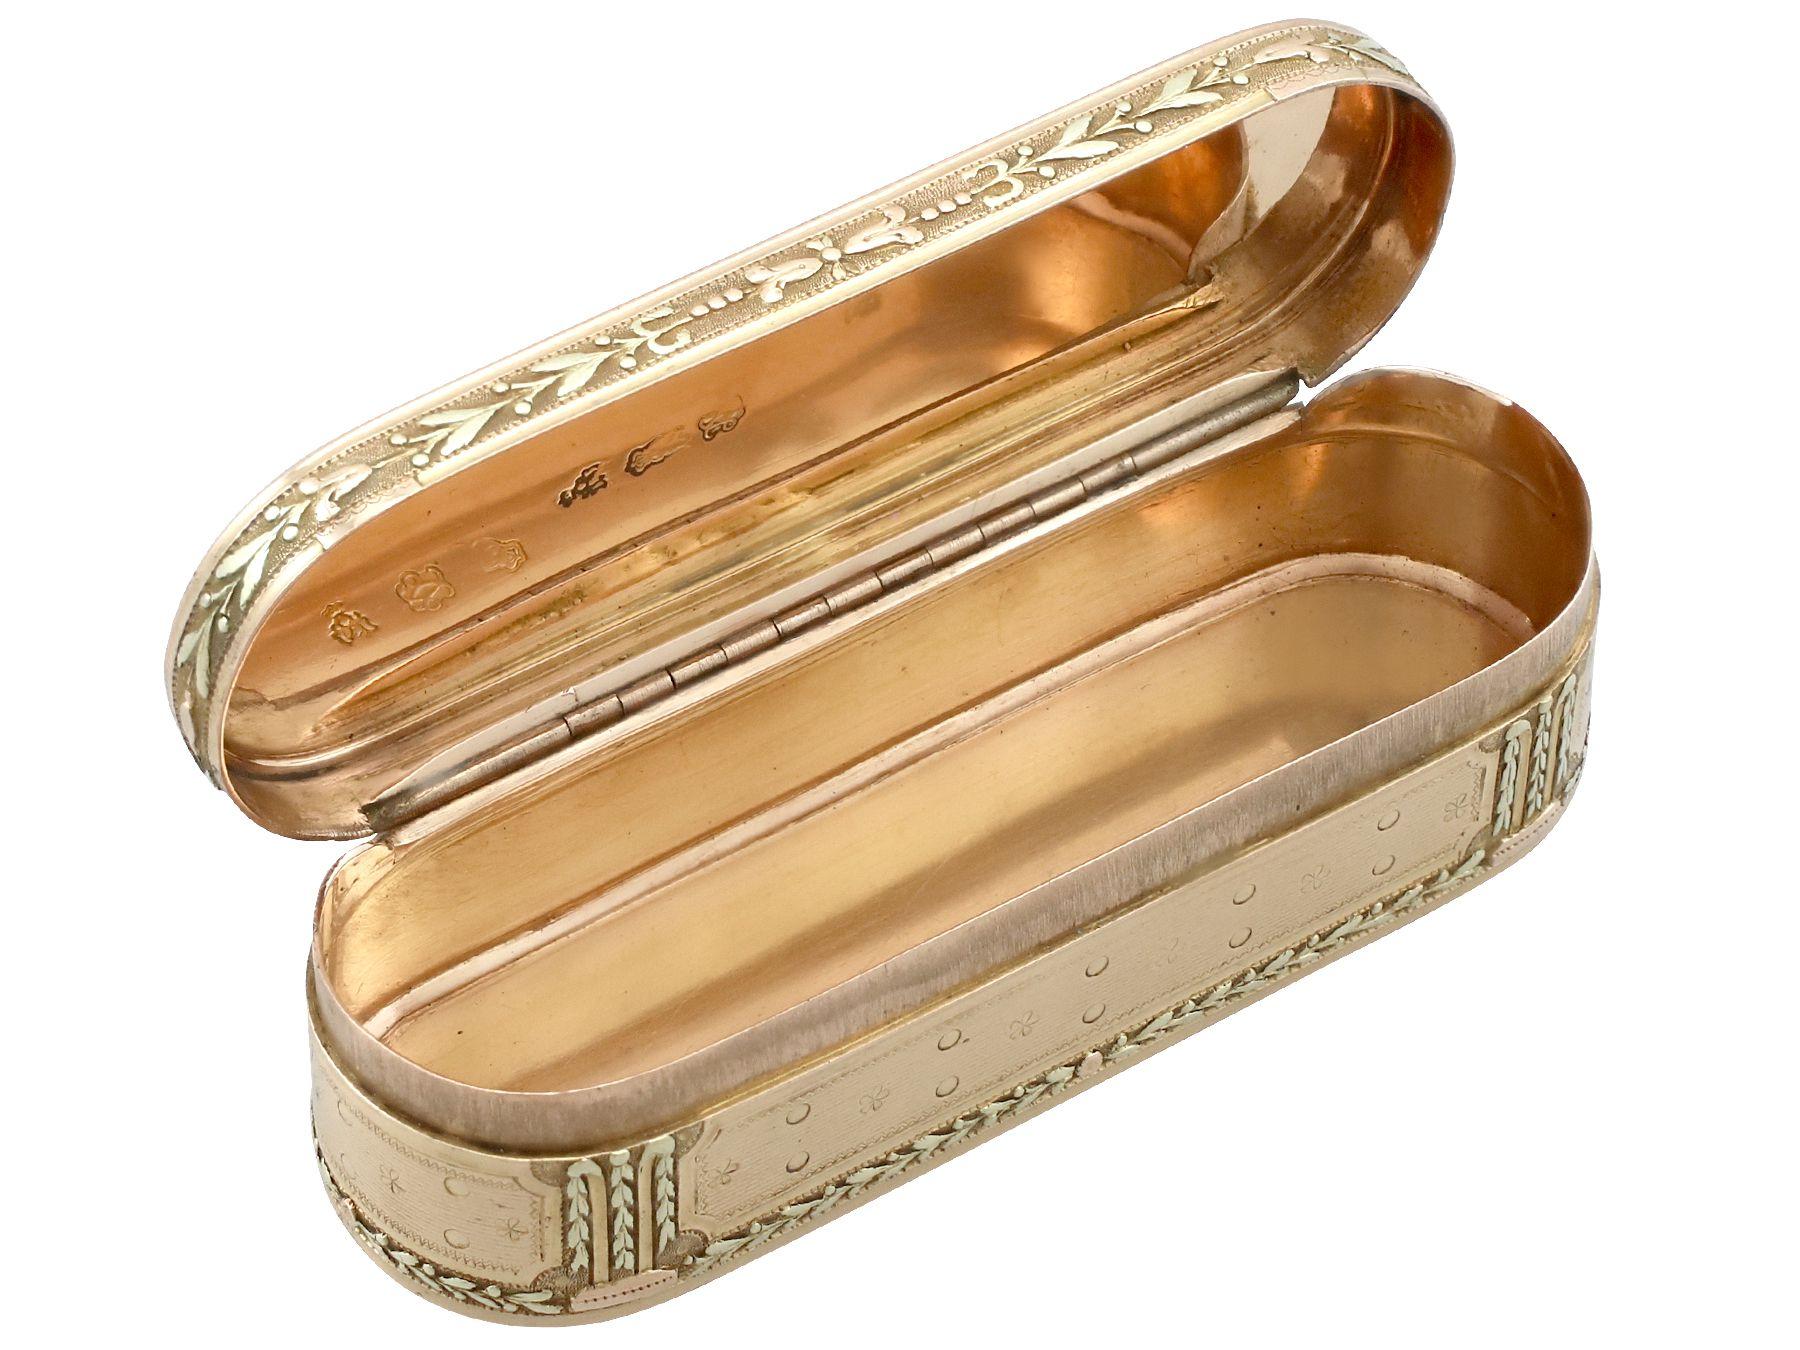 Antique French 20k Gold Snuff Box, Circa 1870 For Sale 4